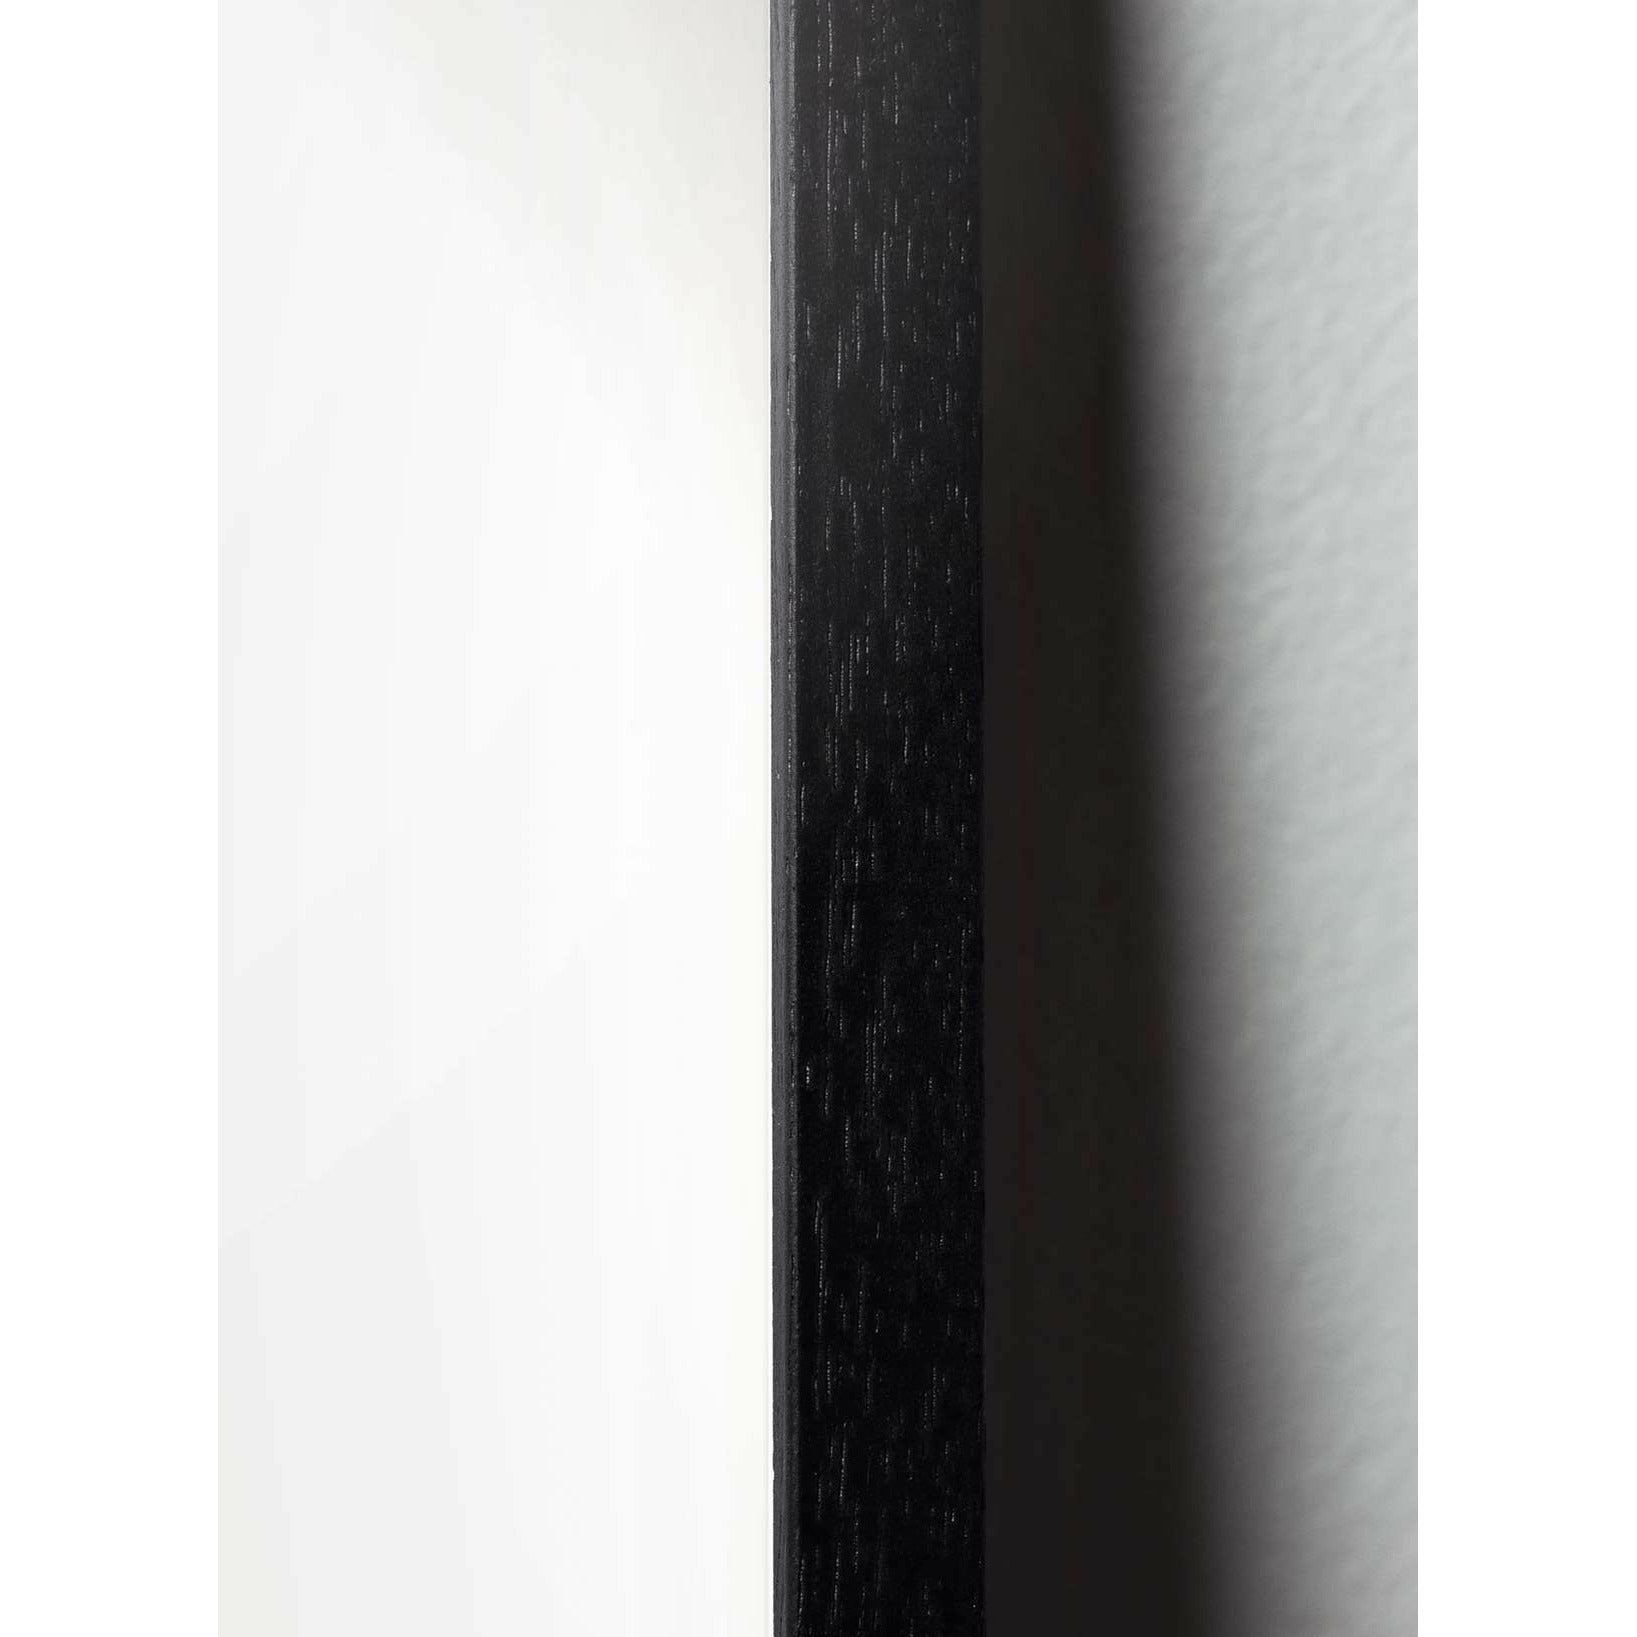 Brainchild Egg Figures Poster, Rahmen aus schwarz lackiertem Holz 30x40 cm, schwarz